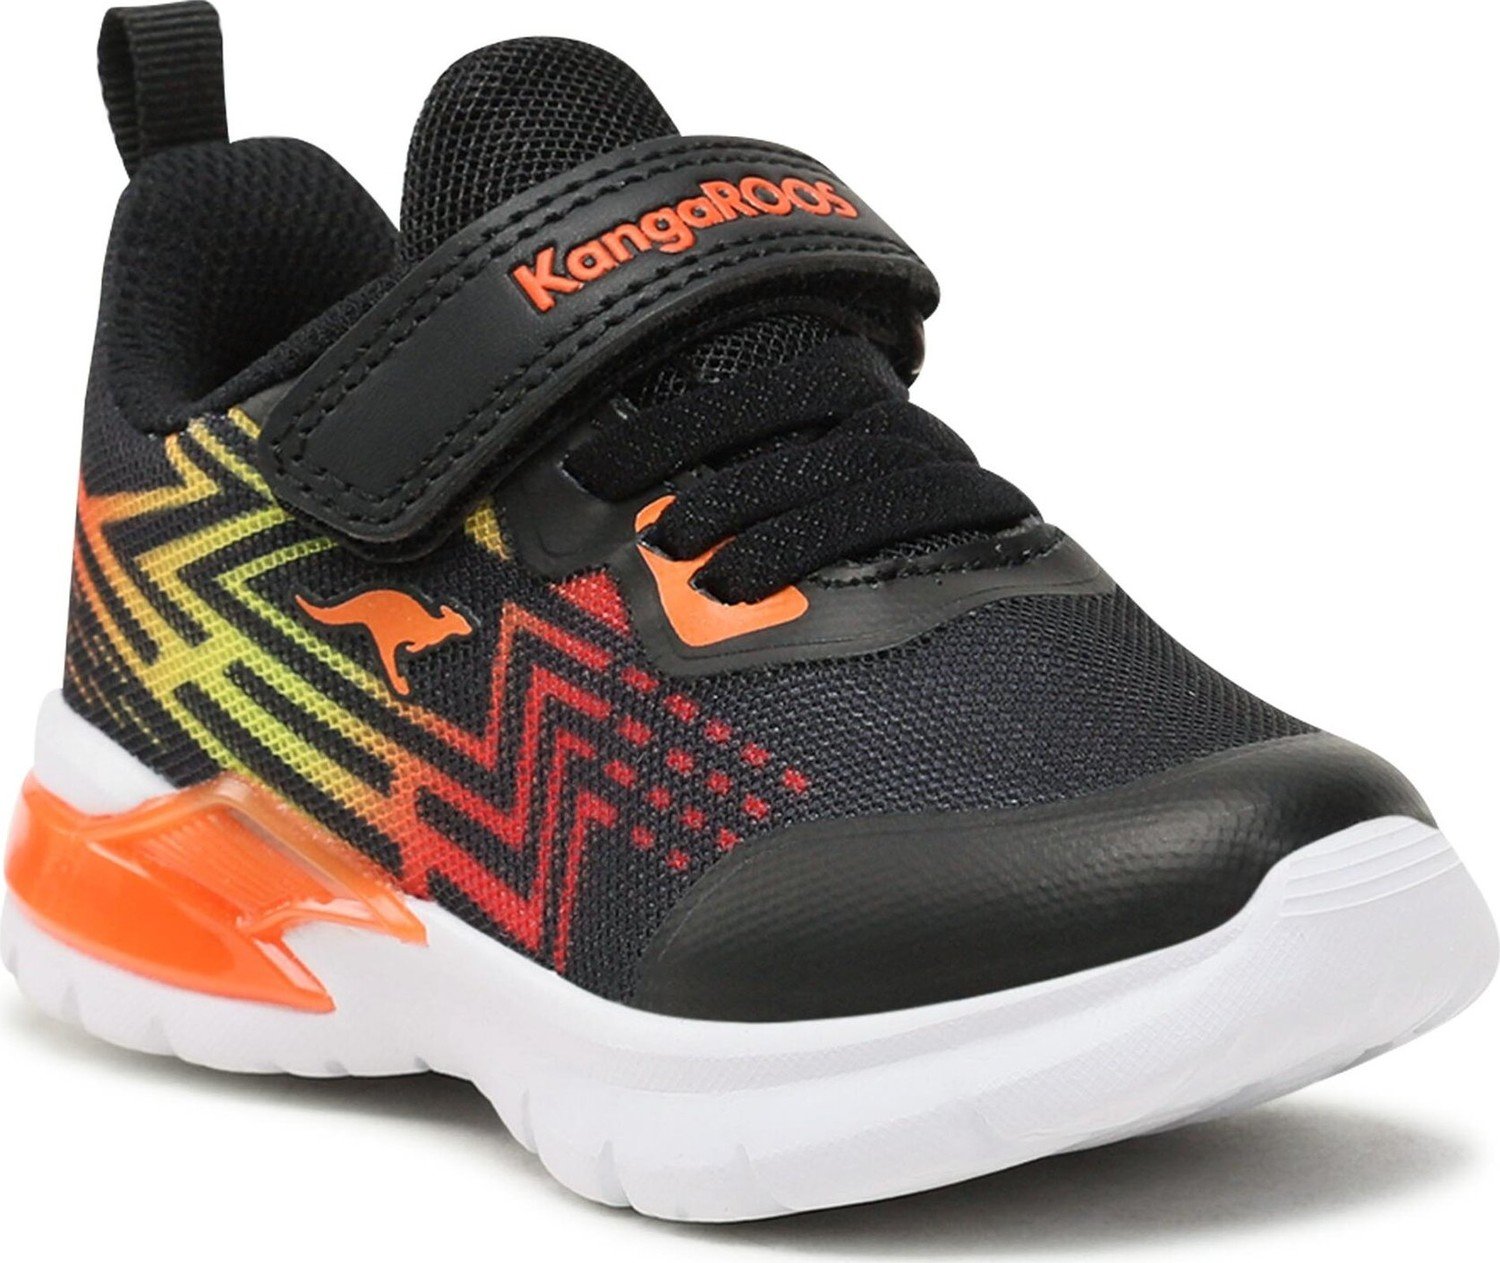 Sneakersy KangaRoos K-Sl Arouser Ev 00012 000 5075 M Jet Black/Neon Orange